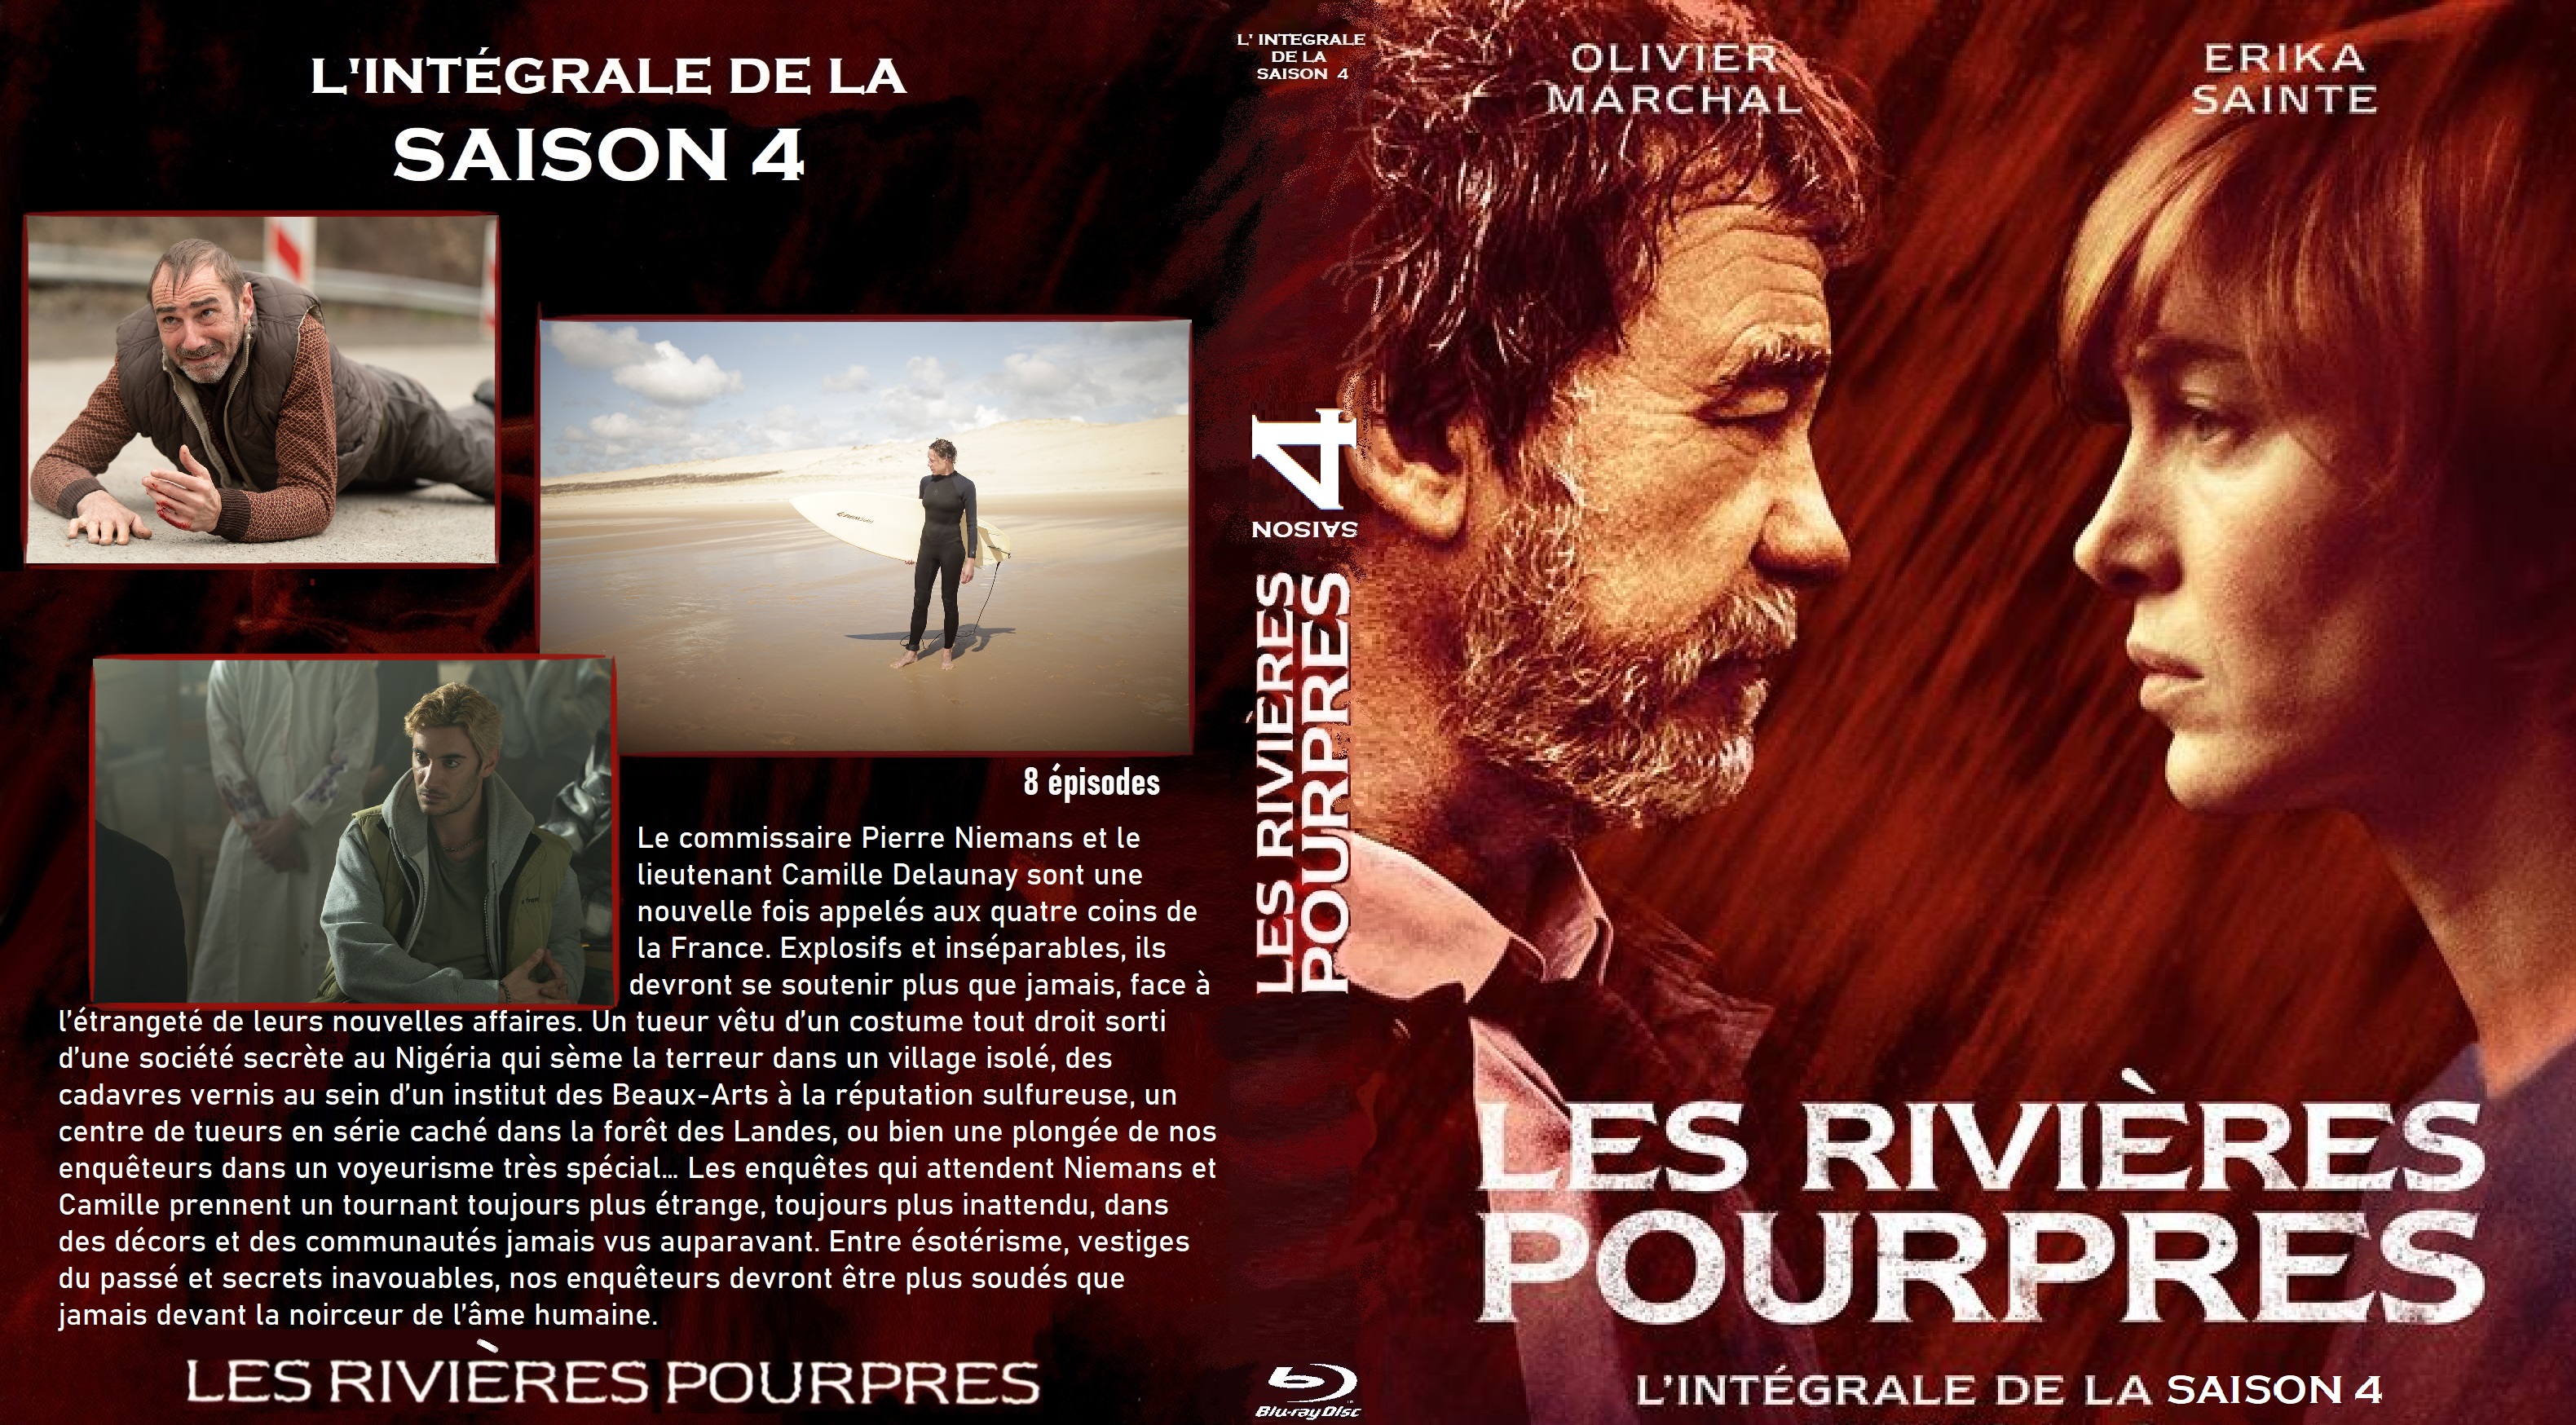 Jaquette DVD Les rivieres pourpres saison 4 custom (BLU-RAY)